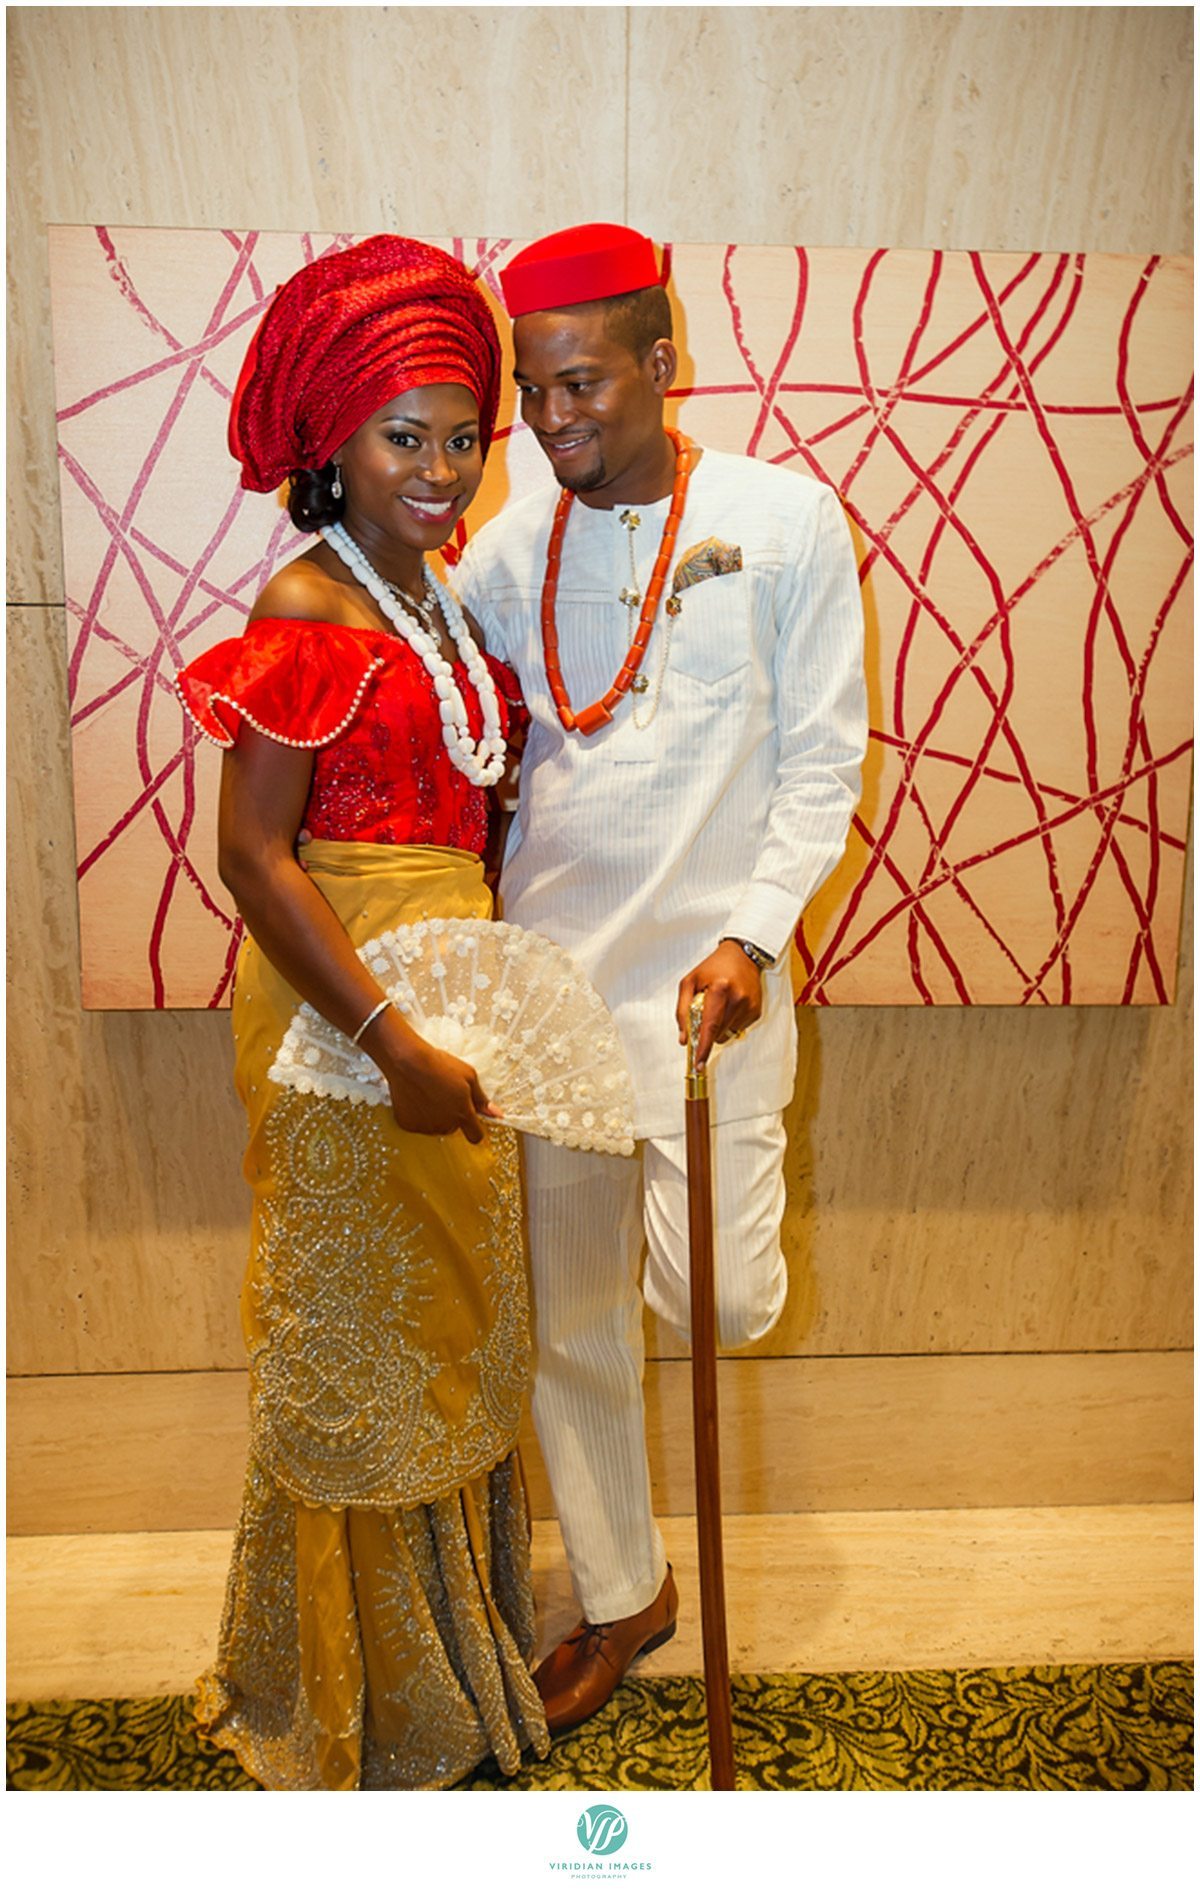 Renaissance Waerly Atlanta Wedding Nigerian Bride and Groom Photo